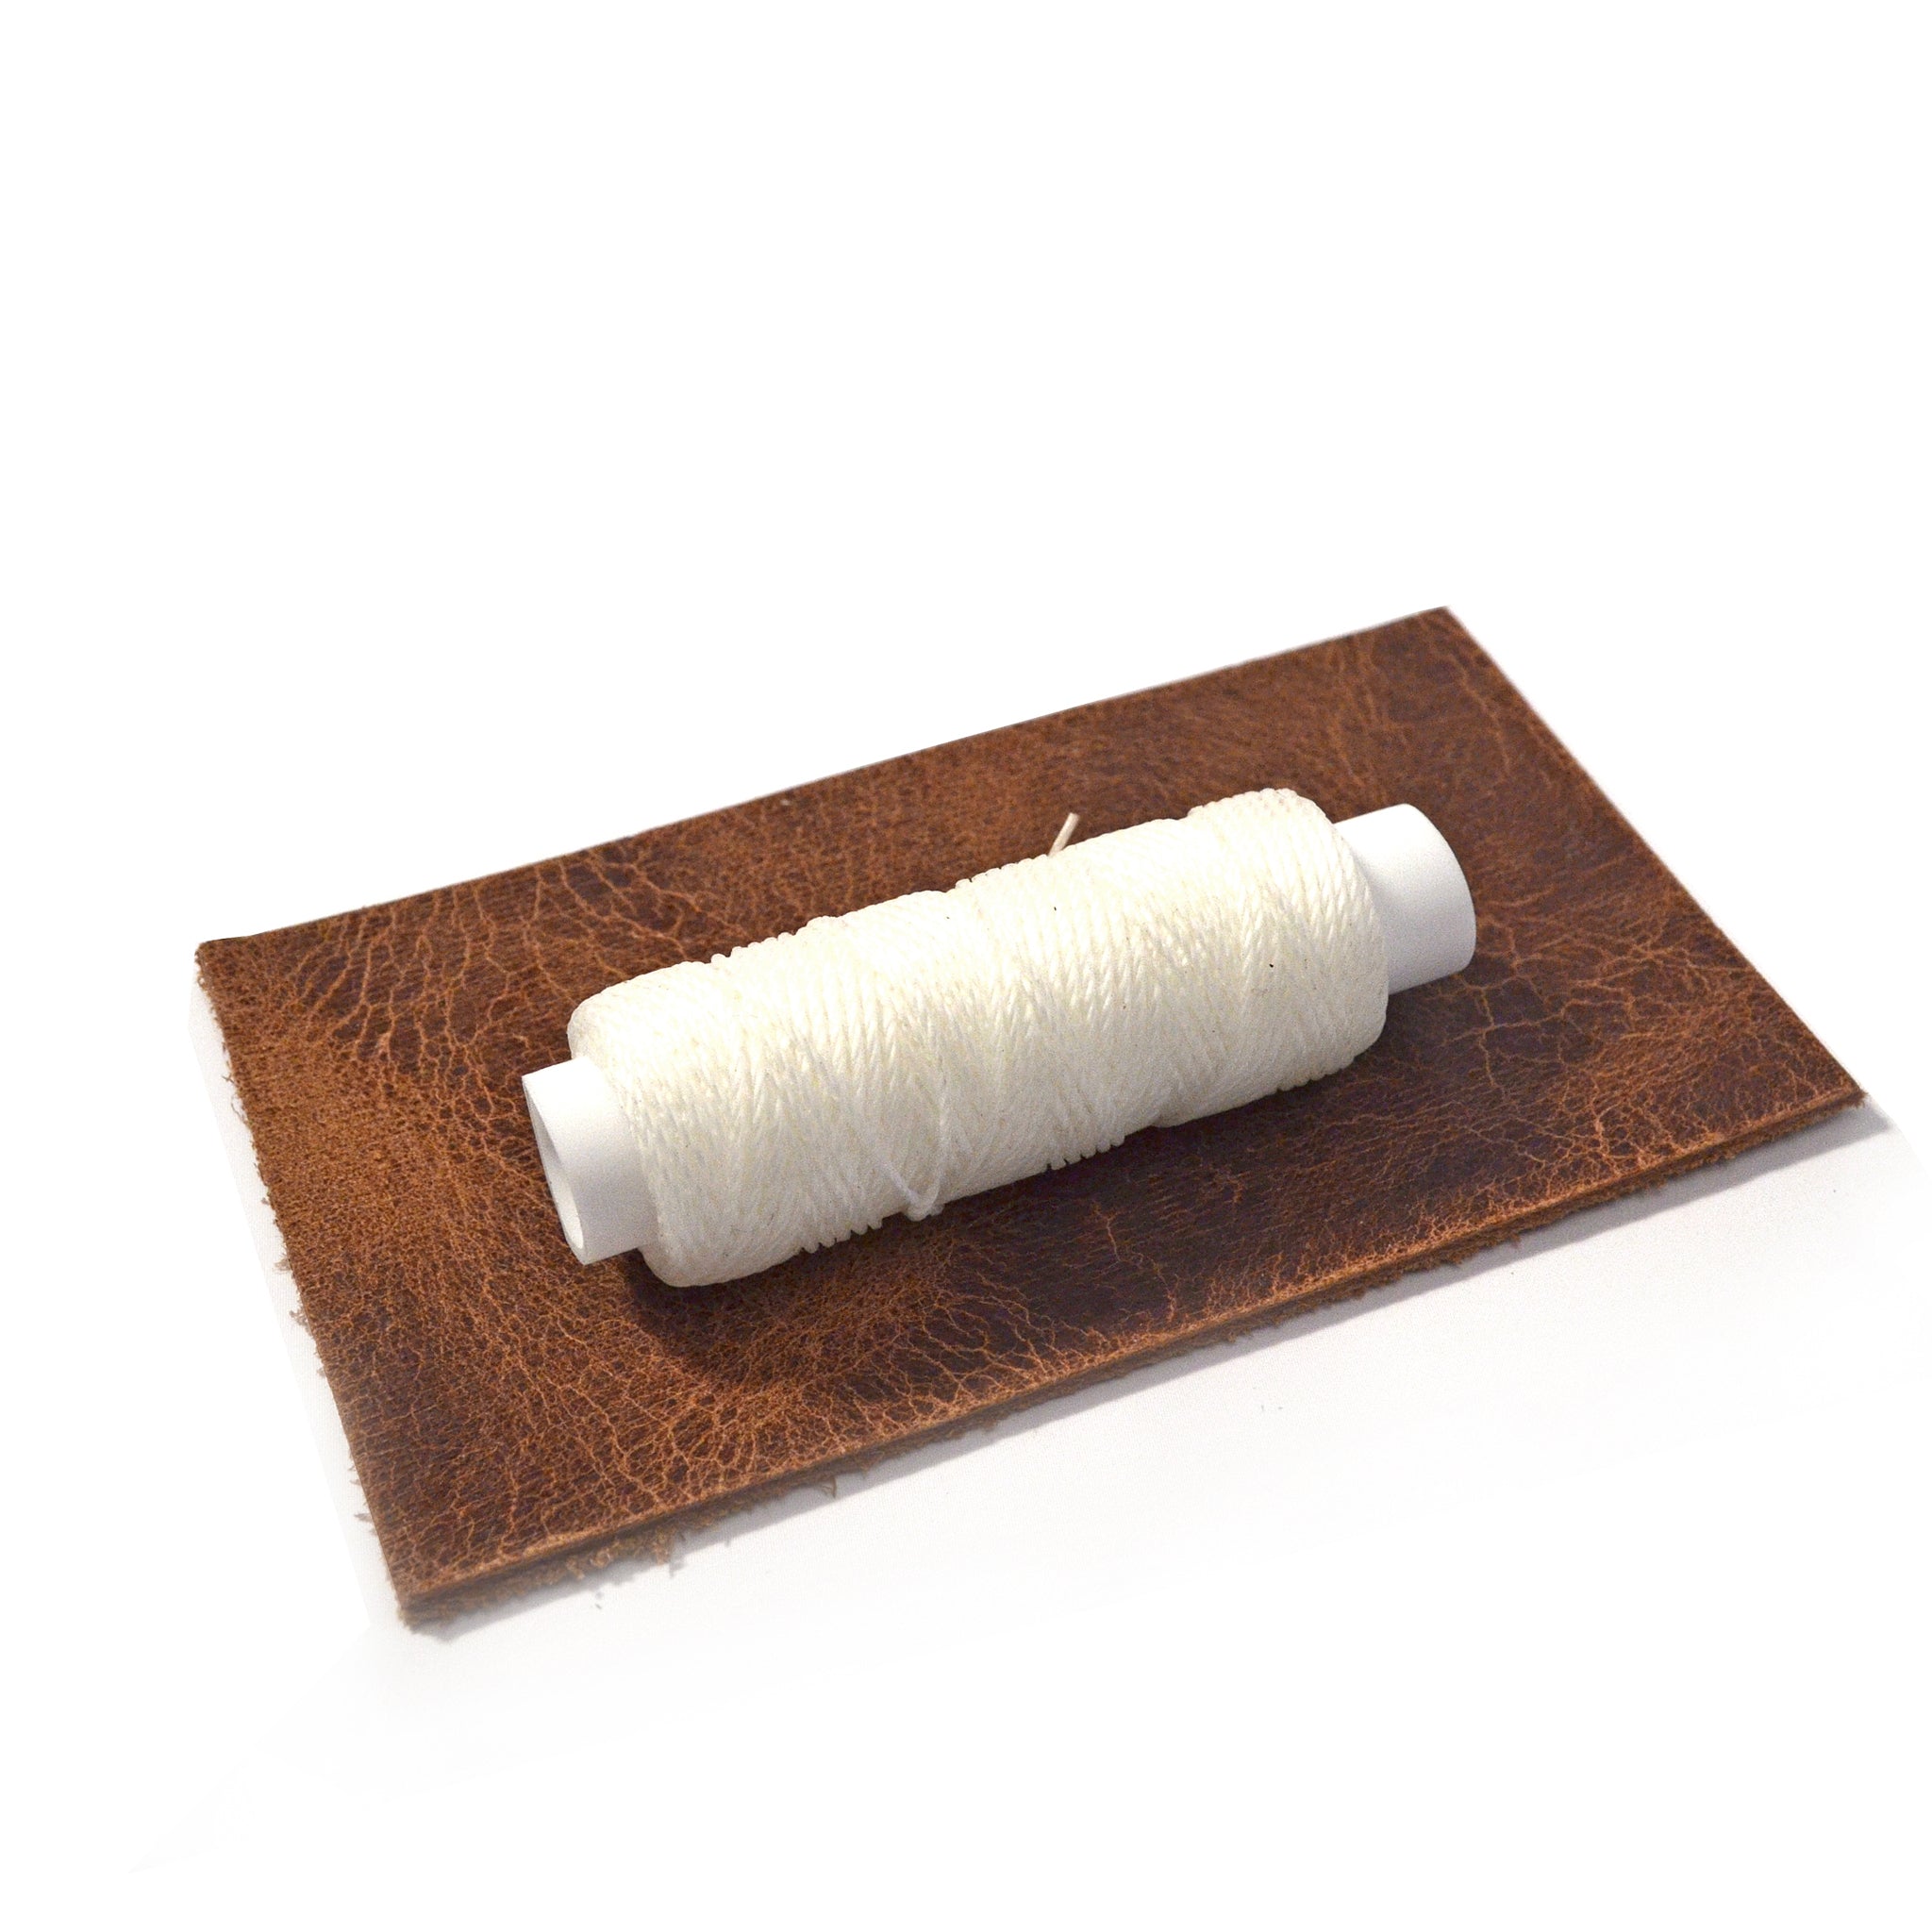 White Waxed Nylon Thread from Identity Leathercraft